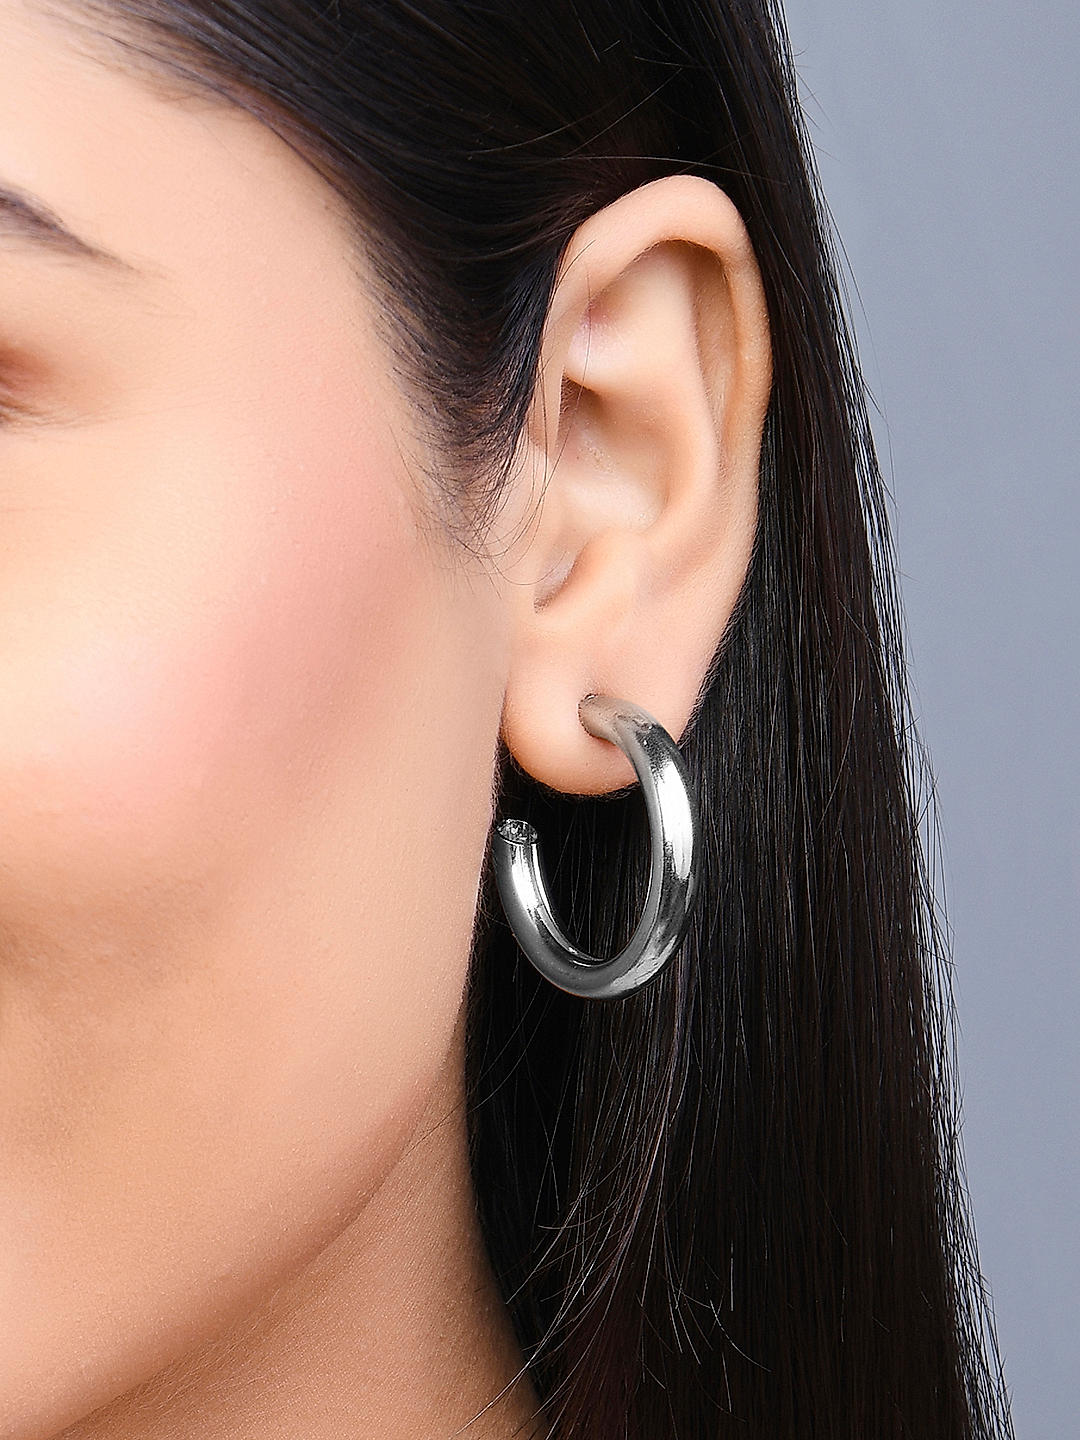 Amazon.com: Thin Medium Sterling Silver Hoop Earrings for Women,  Lightweight Minimal Everyday Earrings 1.5 Inch